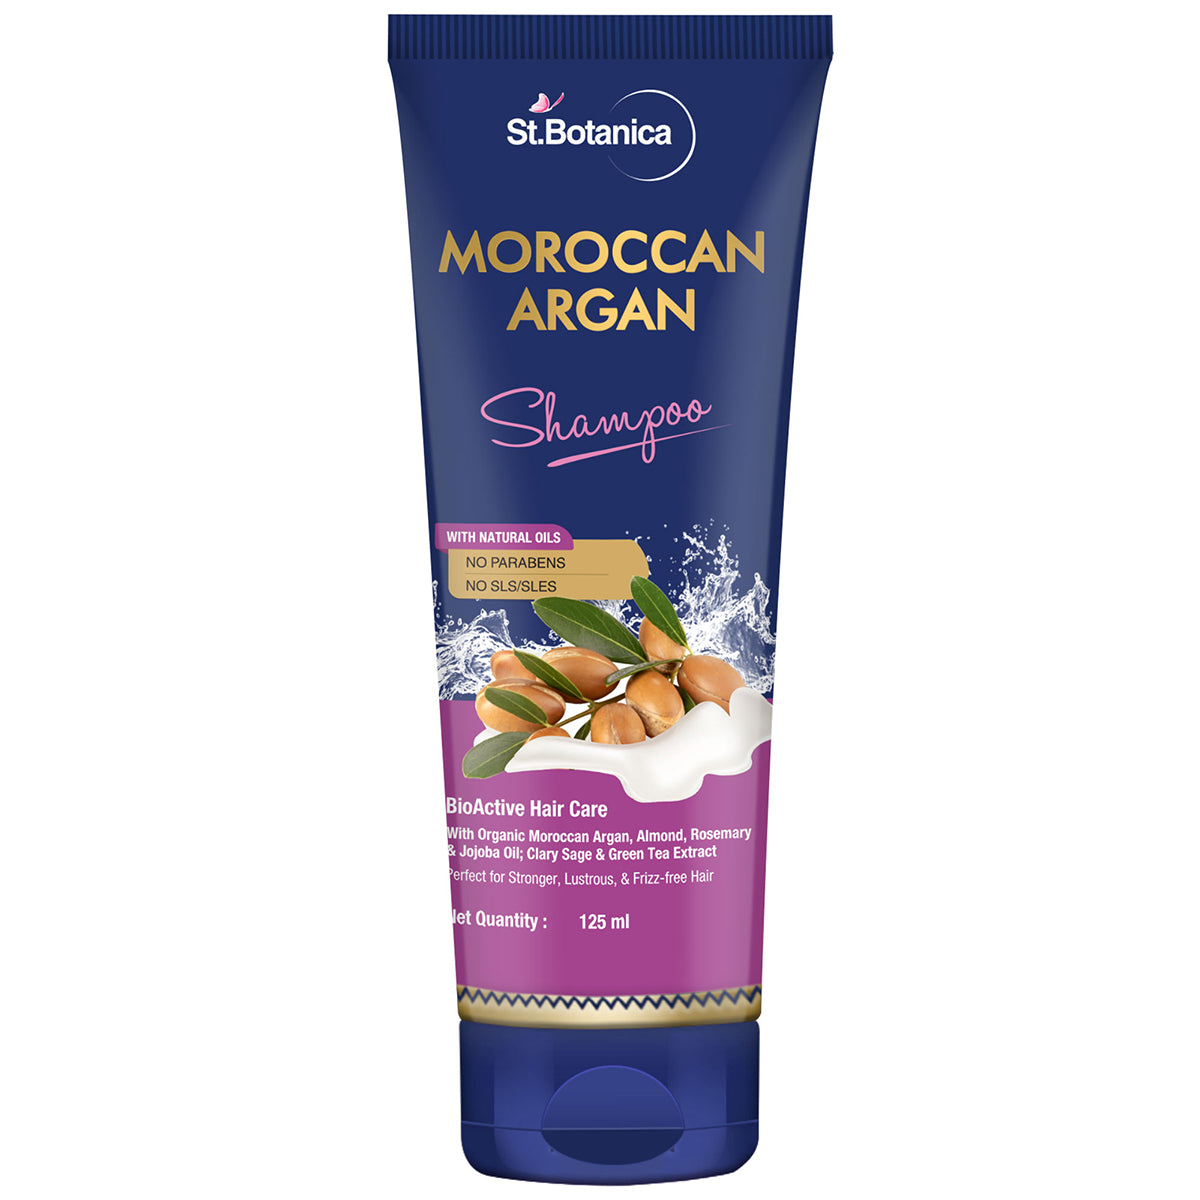 St.Botanica Moroccan Argan Hair Shampoo, 125ml with Moroccan Argan Oil to Nourish Dull & Dry Hair | Cruelty Free & Vegan | Paraben Free | No SLS/SLES